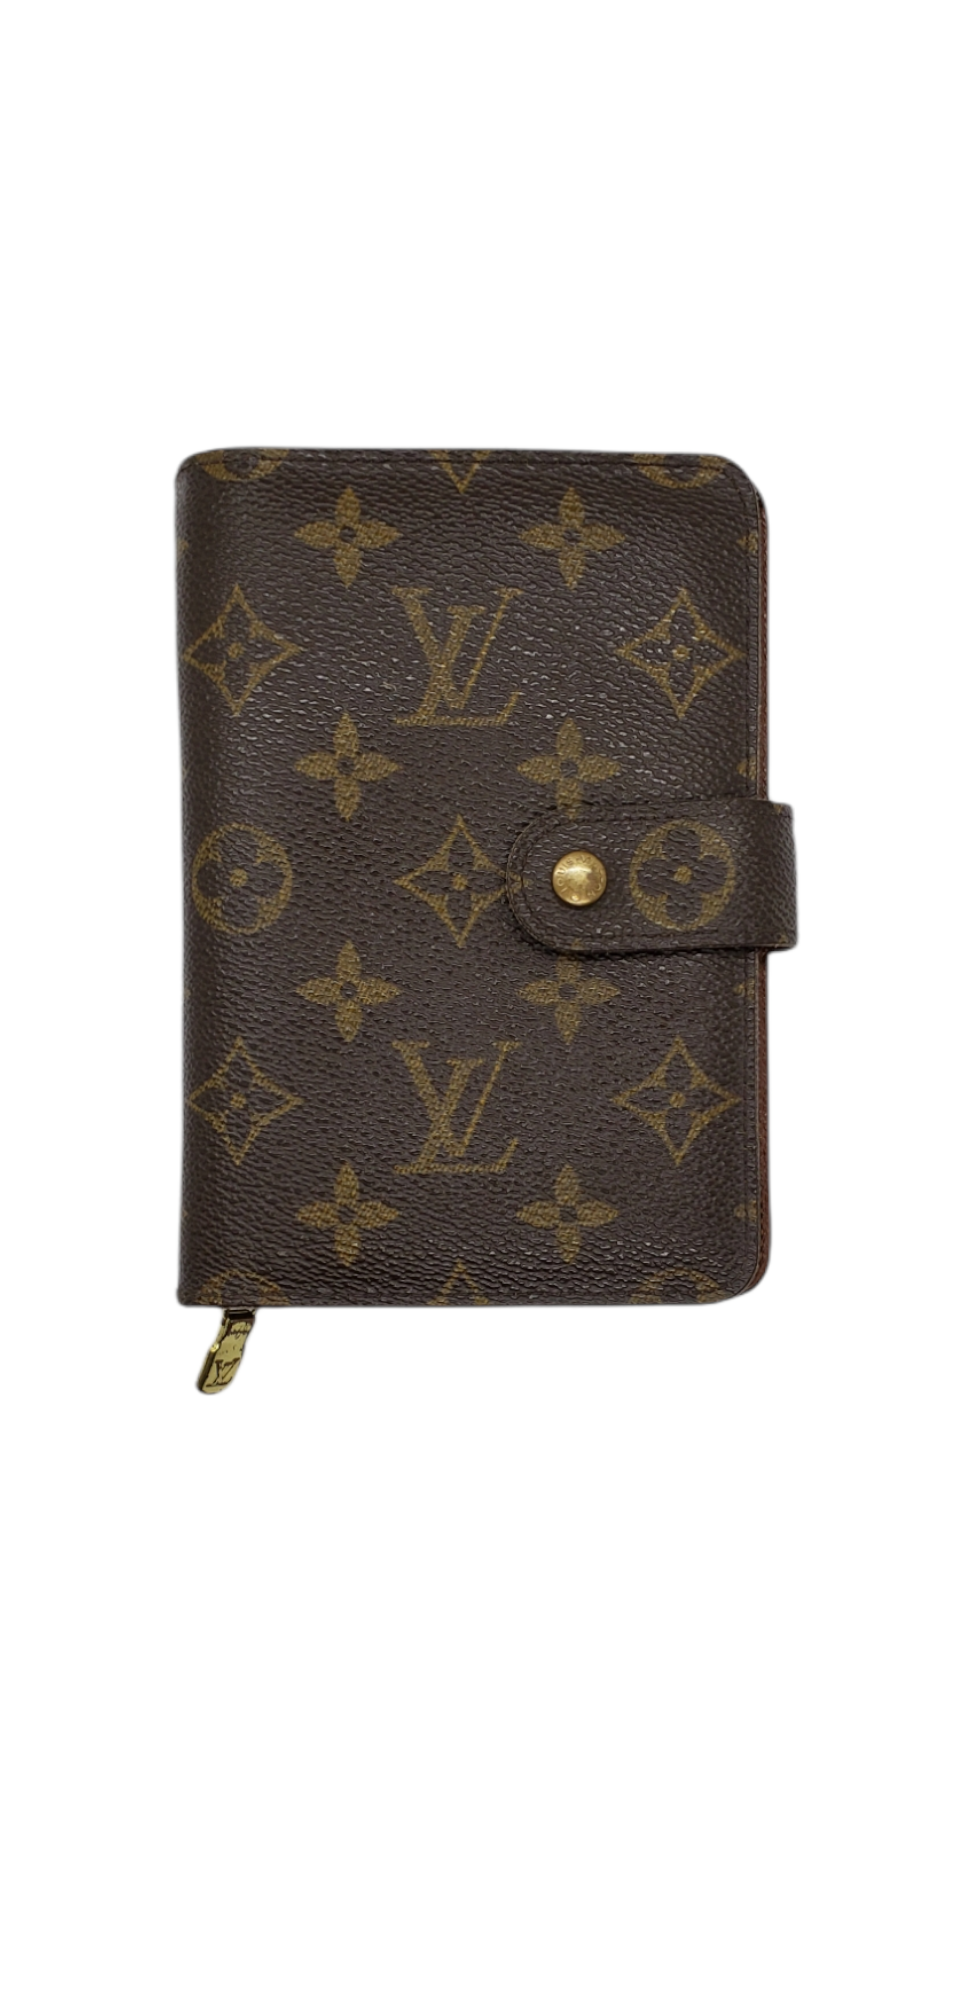 Louis Vuitton

Porte Papier Zippy Wallet

Monogram 2002

Can Accomodate a Passport

Great Condition. Minor Wear on Corners